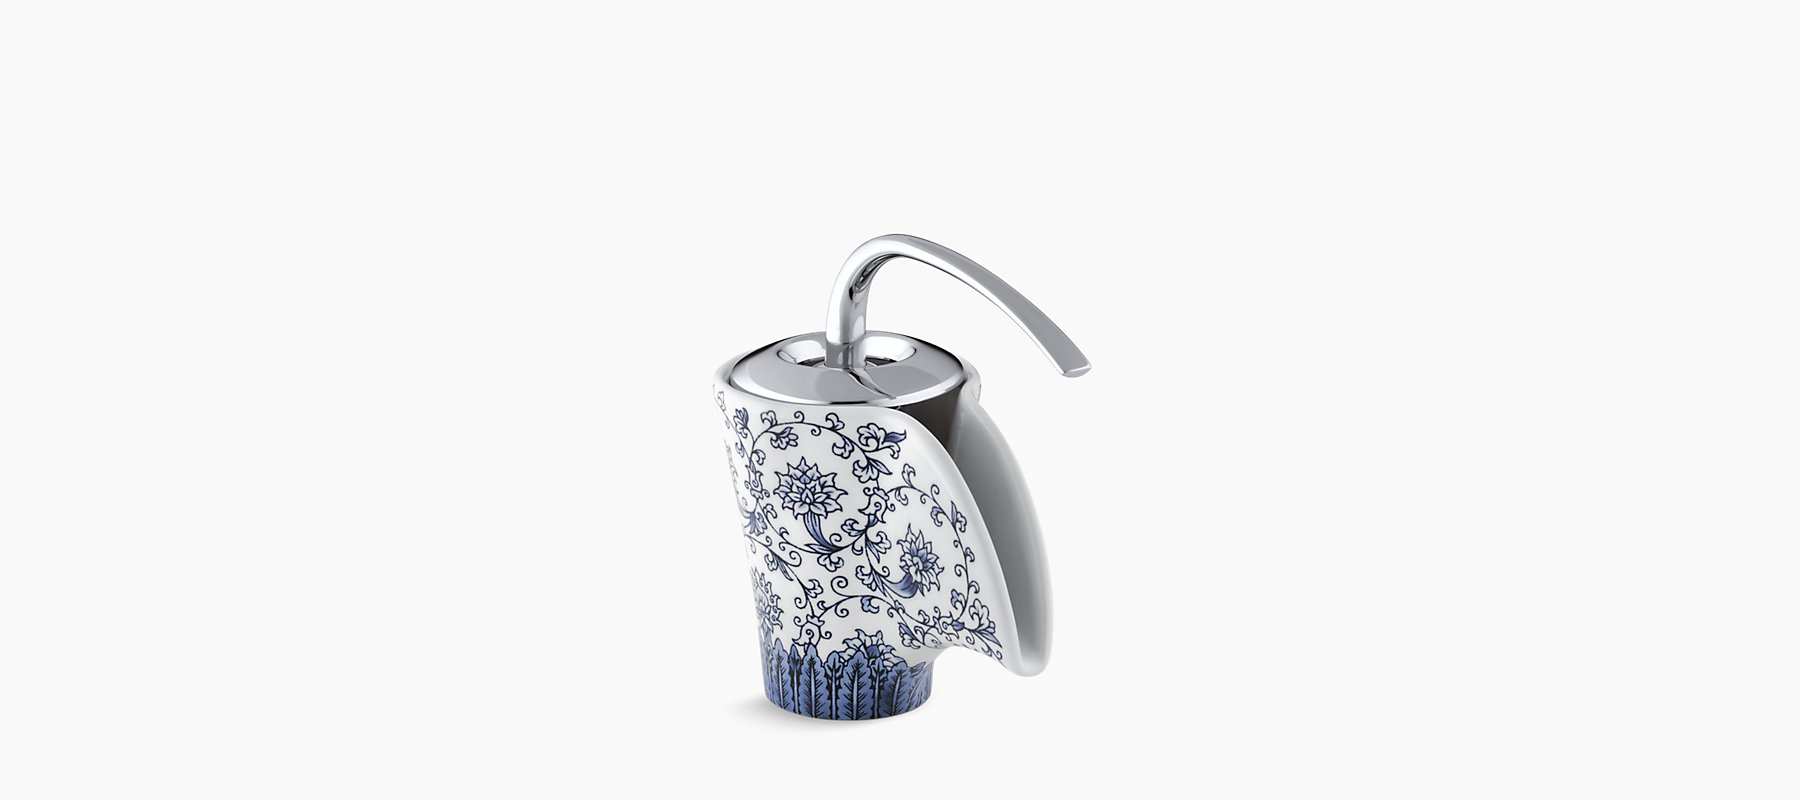 K 11010 VB Imperial Blue Design On Vas Ceramic Faucet With Lever